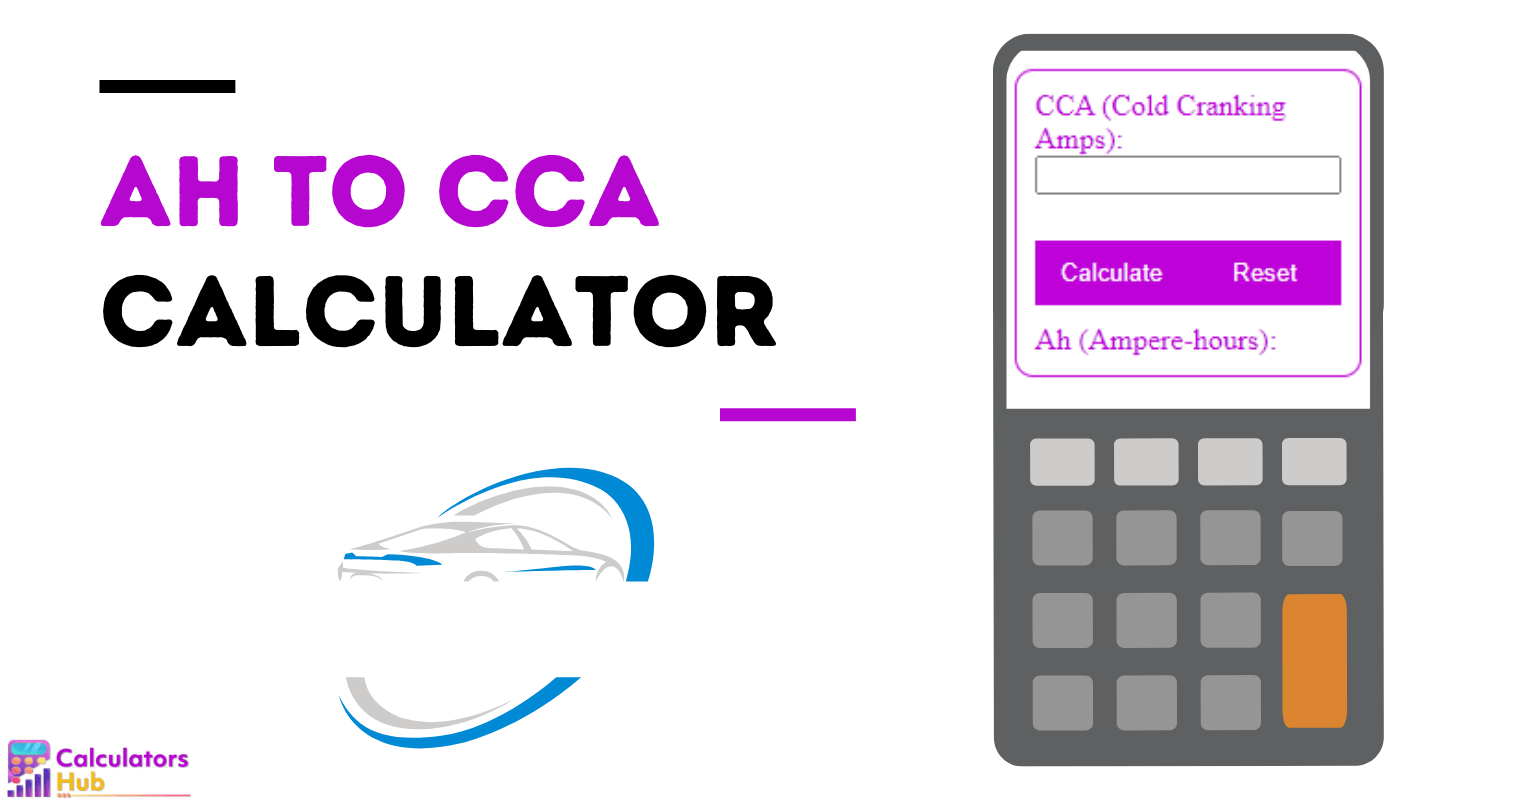 Ah to CCA Calculator